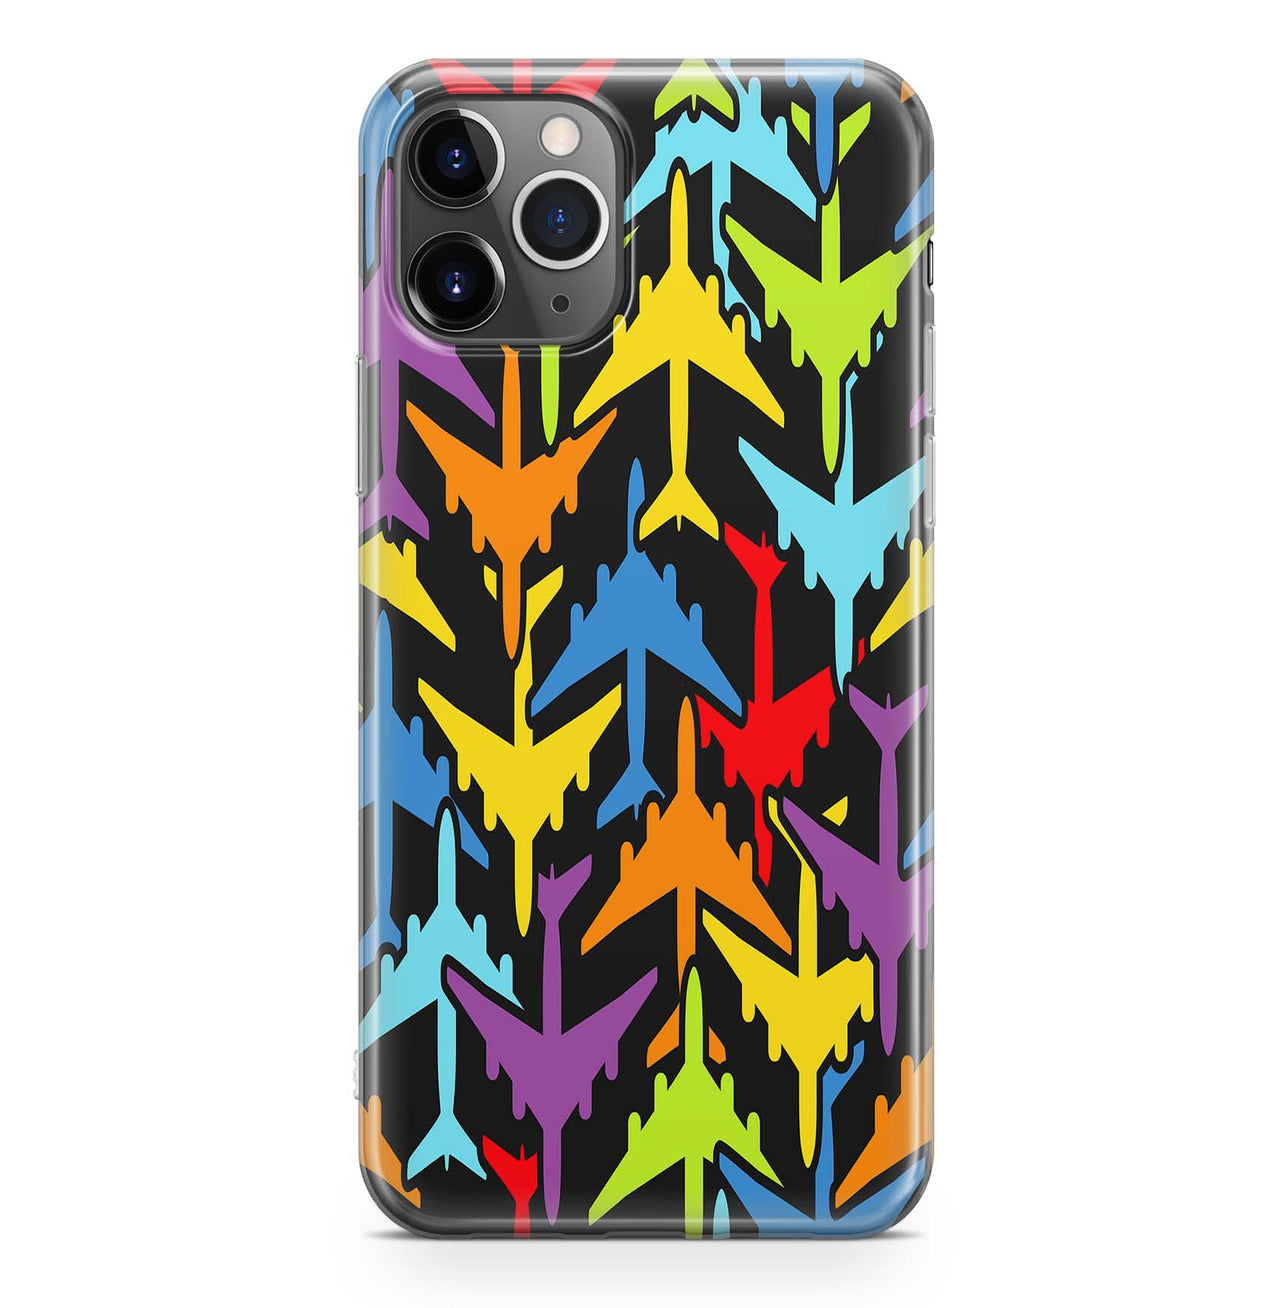 Super Colourful Airplanes Designed iPhone Cases